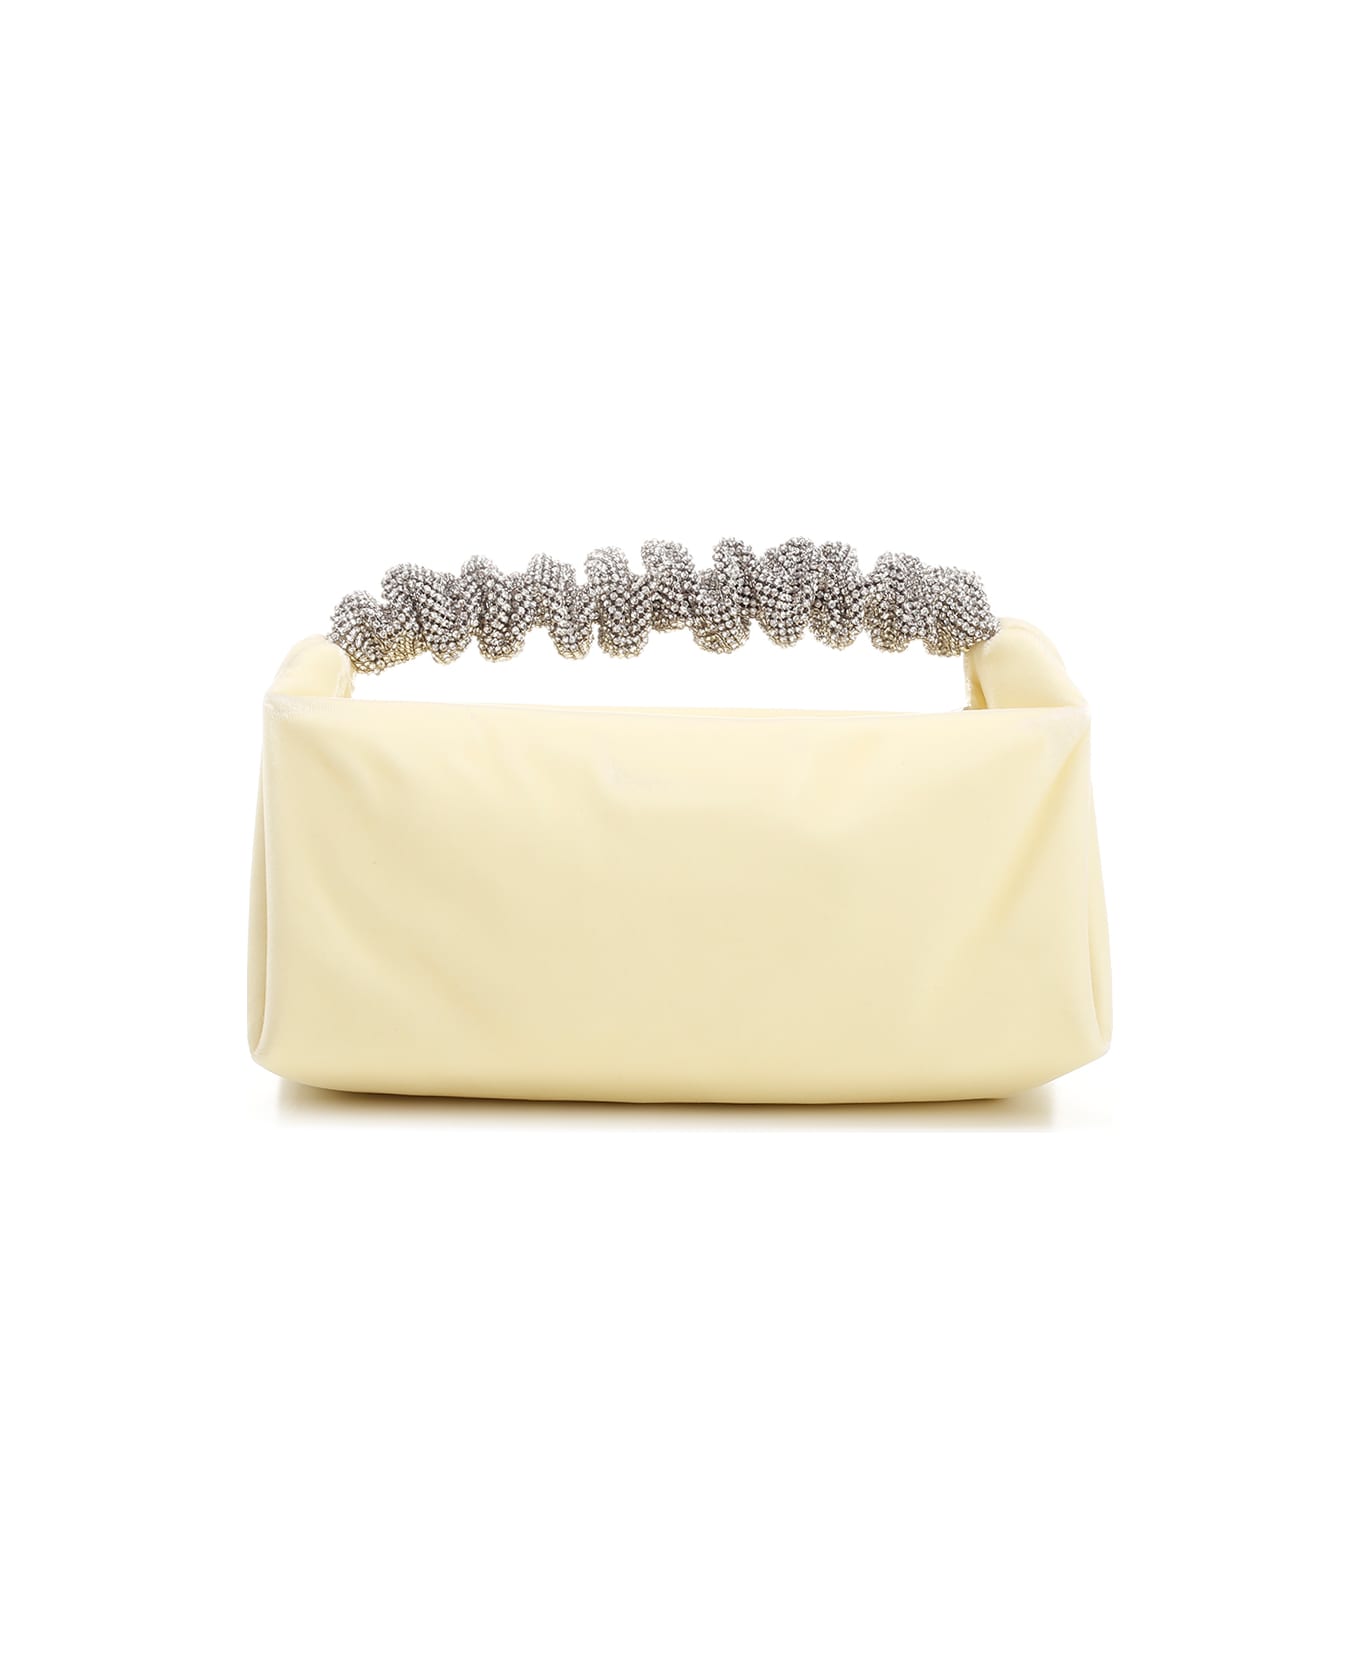 Alexander Wang 'scrunchie' Handbag - A Vanilla